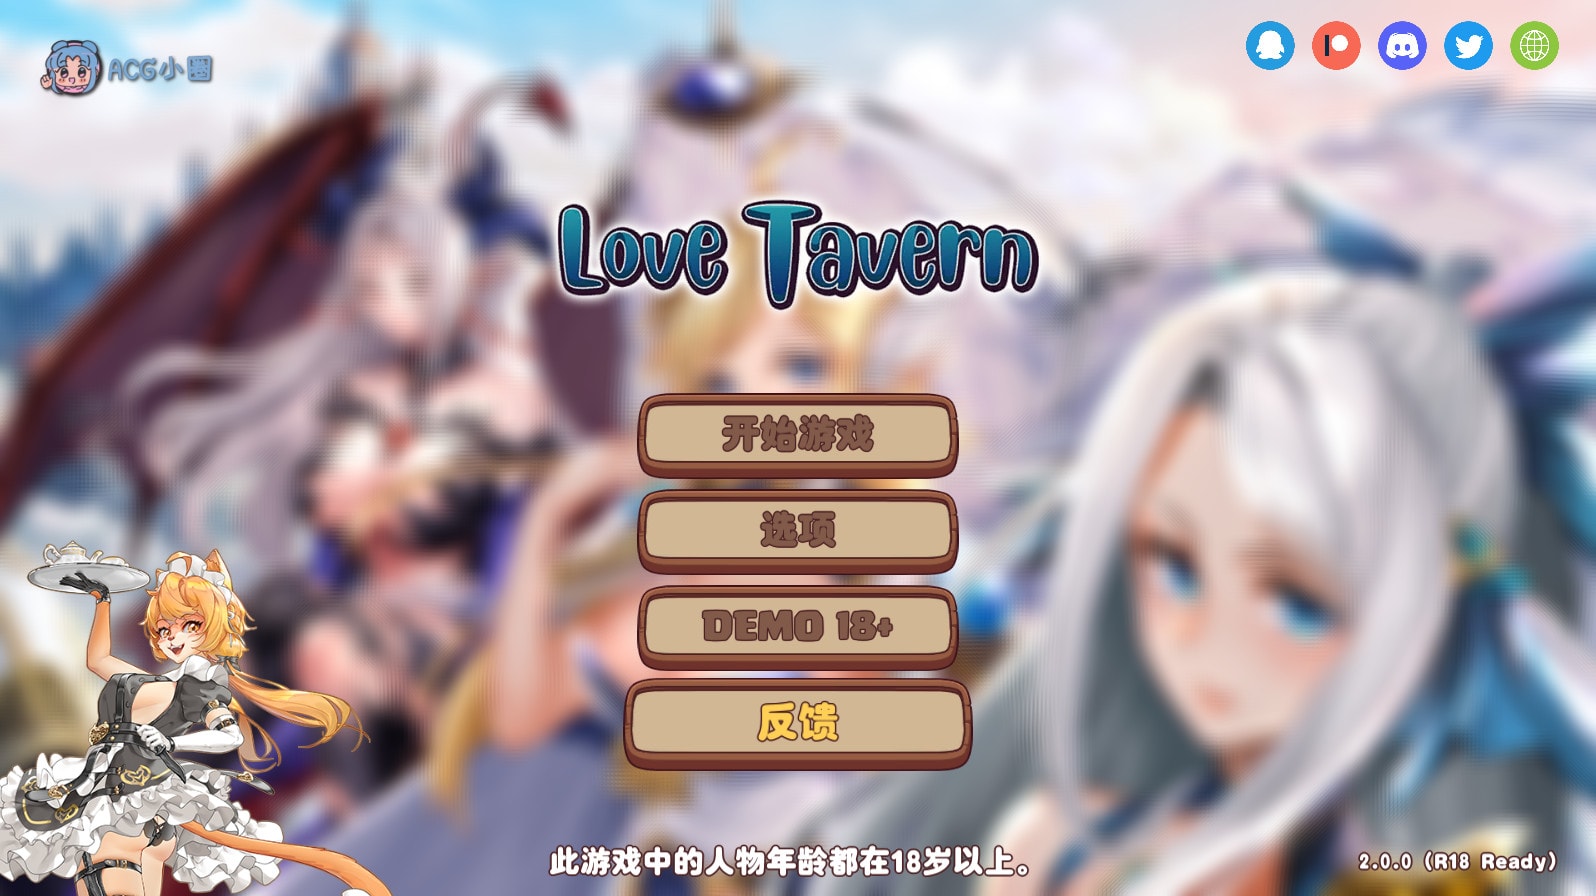 PC【SLG/STEAM官中/动态无码/正式版发布】异世界爱情酒馆 Love Tavern V2.0.0 正式版+全DLC 【3.3G】